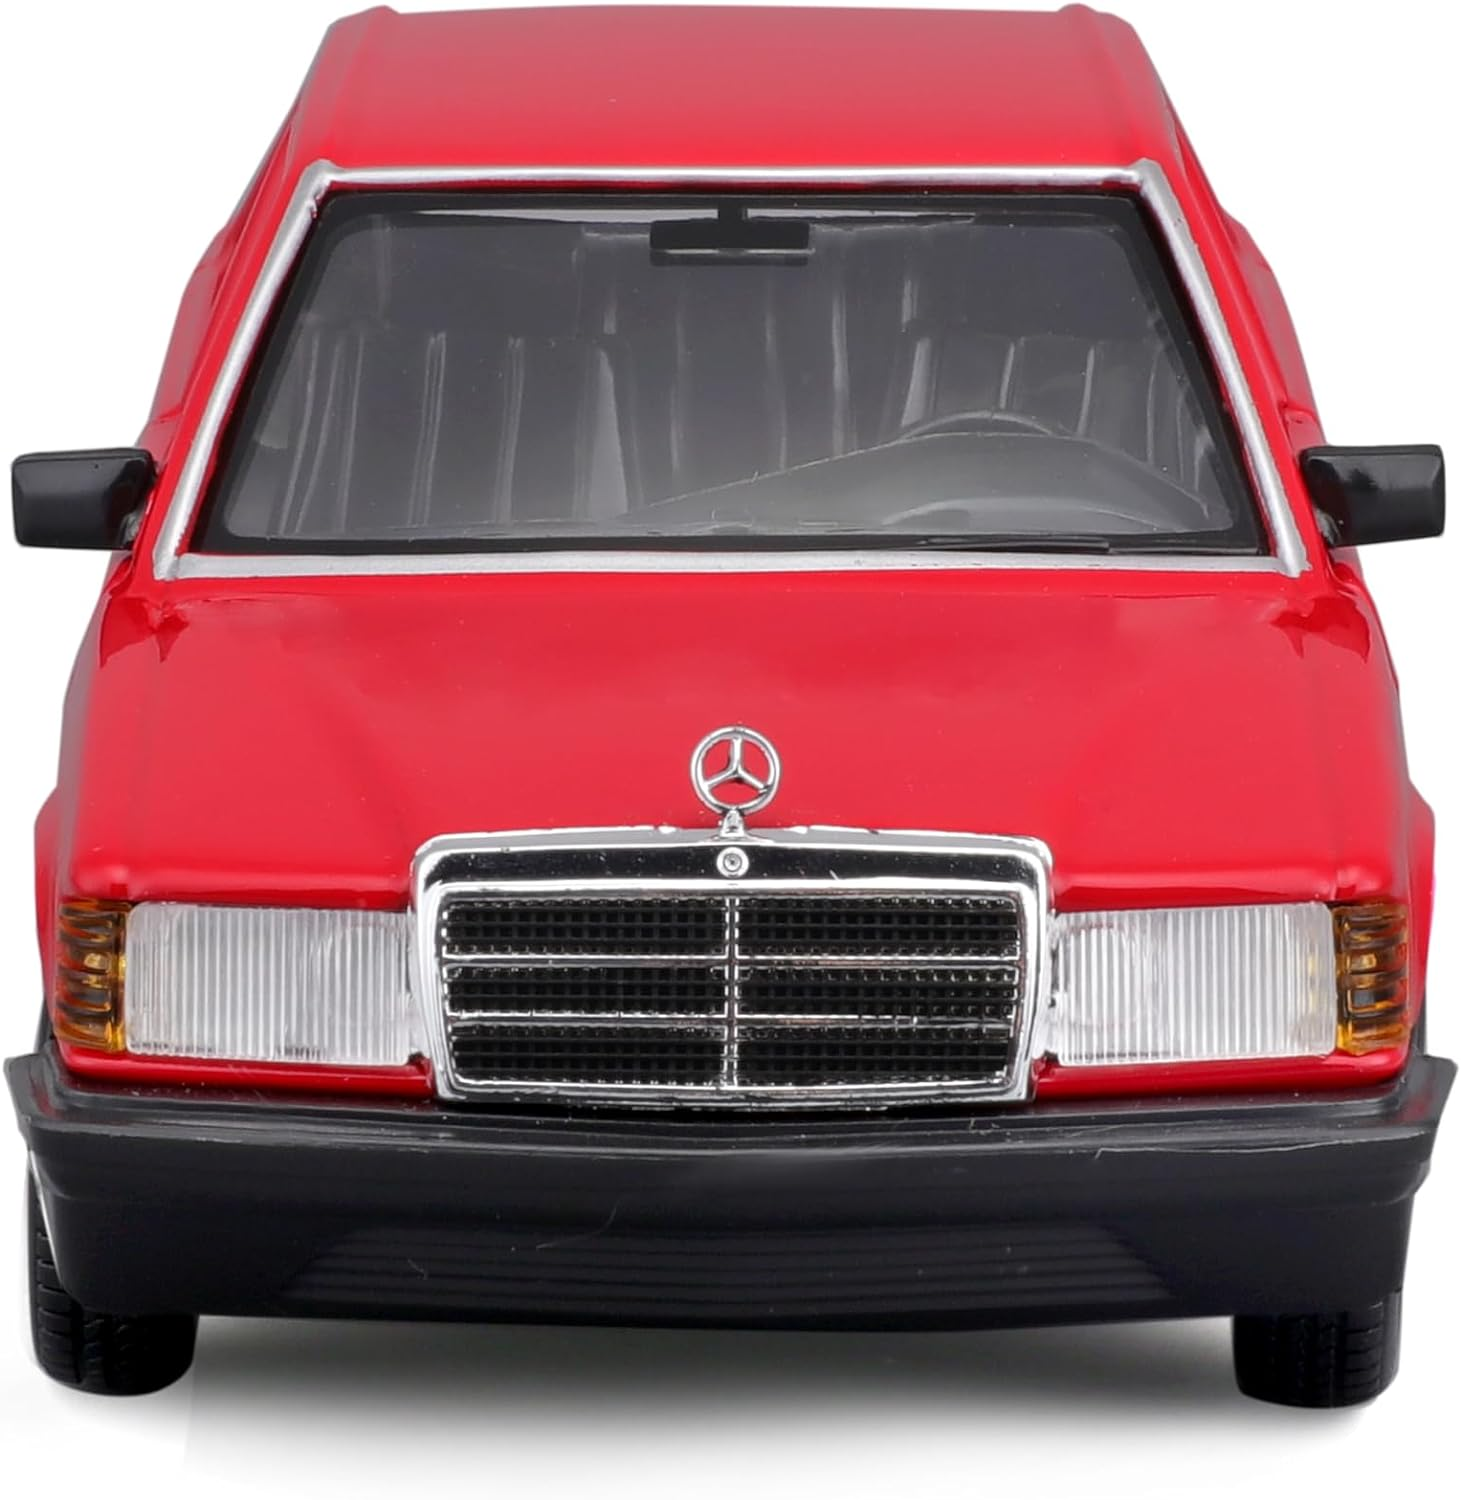 1:24) 190E Maßstab ´87 BBURAGO (rot, Spielzeugauto Mercedes